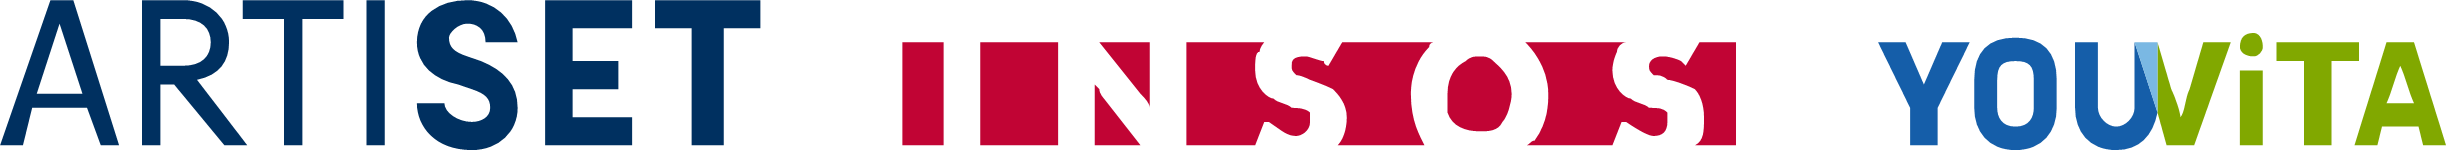 Logo Artiset, Insos, Youvita